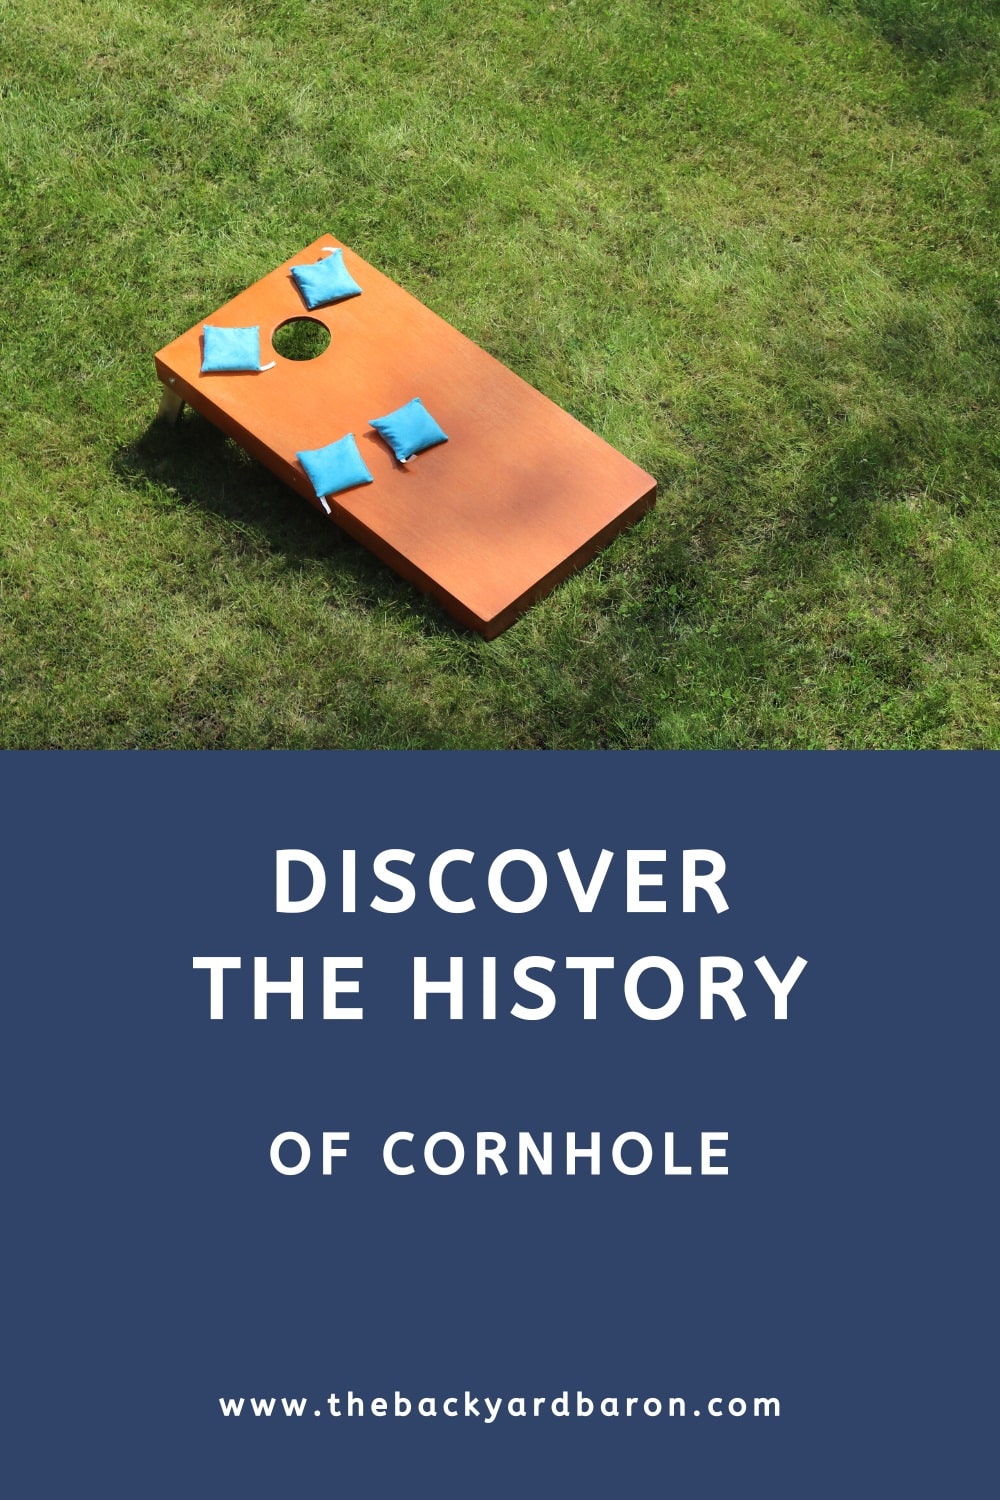 Discover the history of cornhole